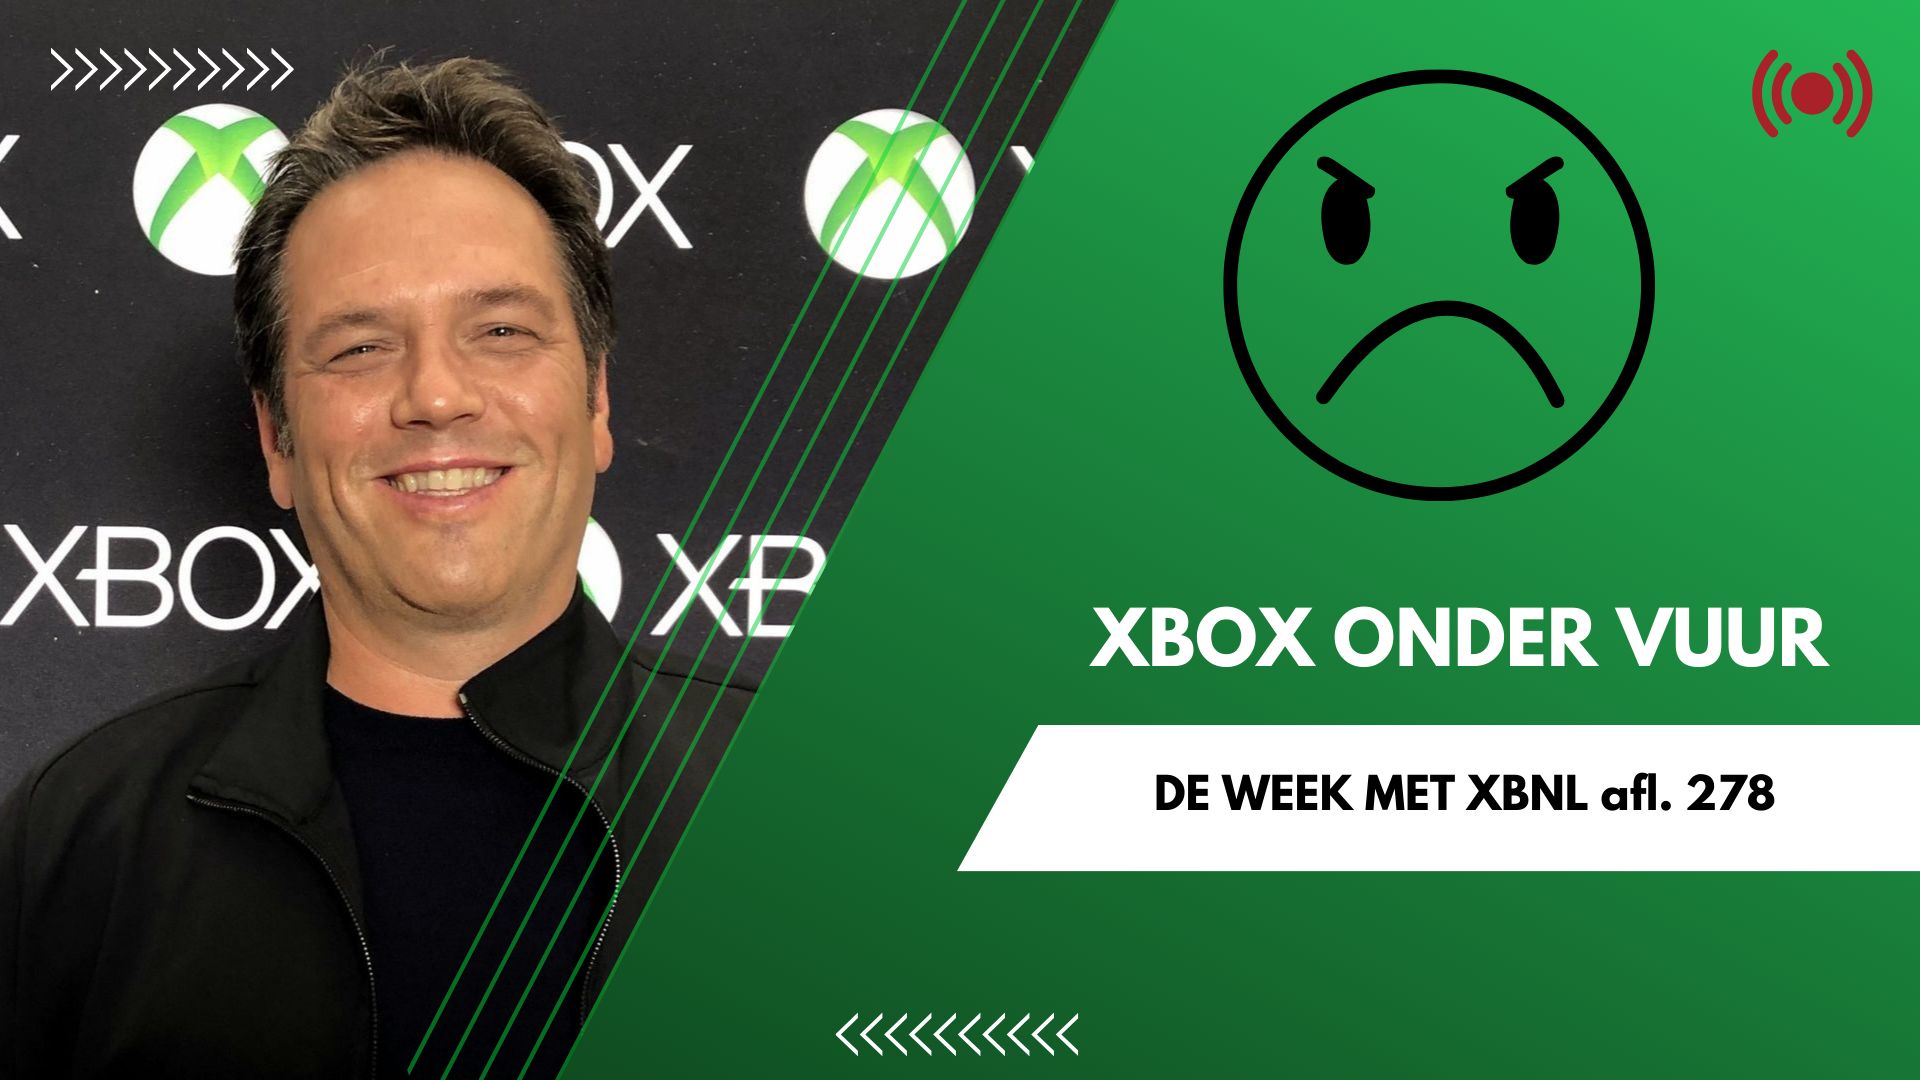 Xbox ligt onder vuur – De Week Met XBNL afl. 278